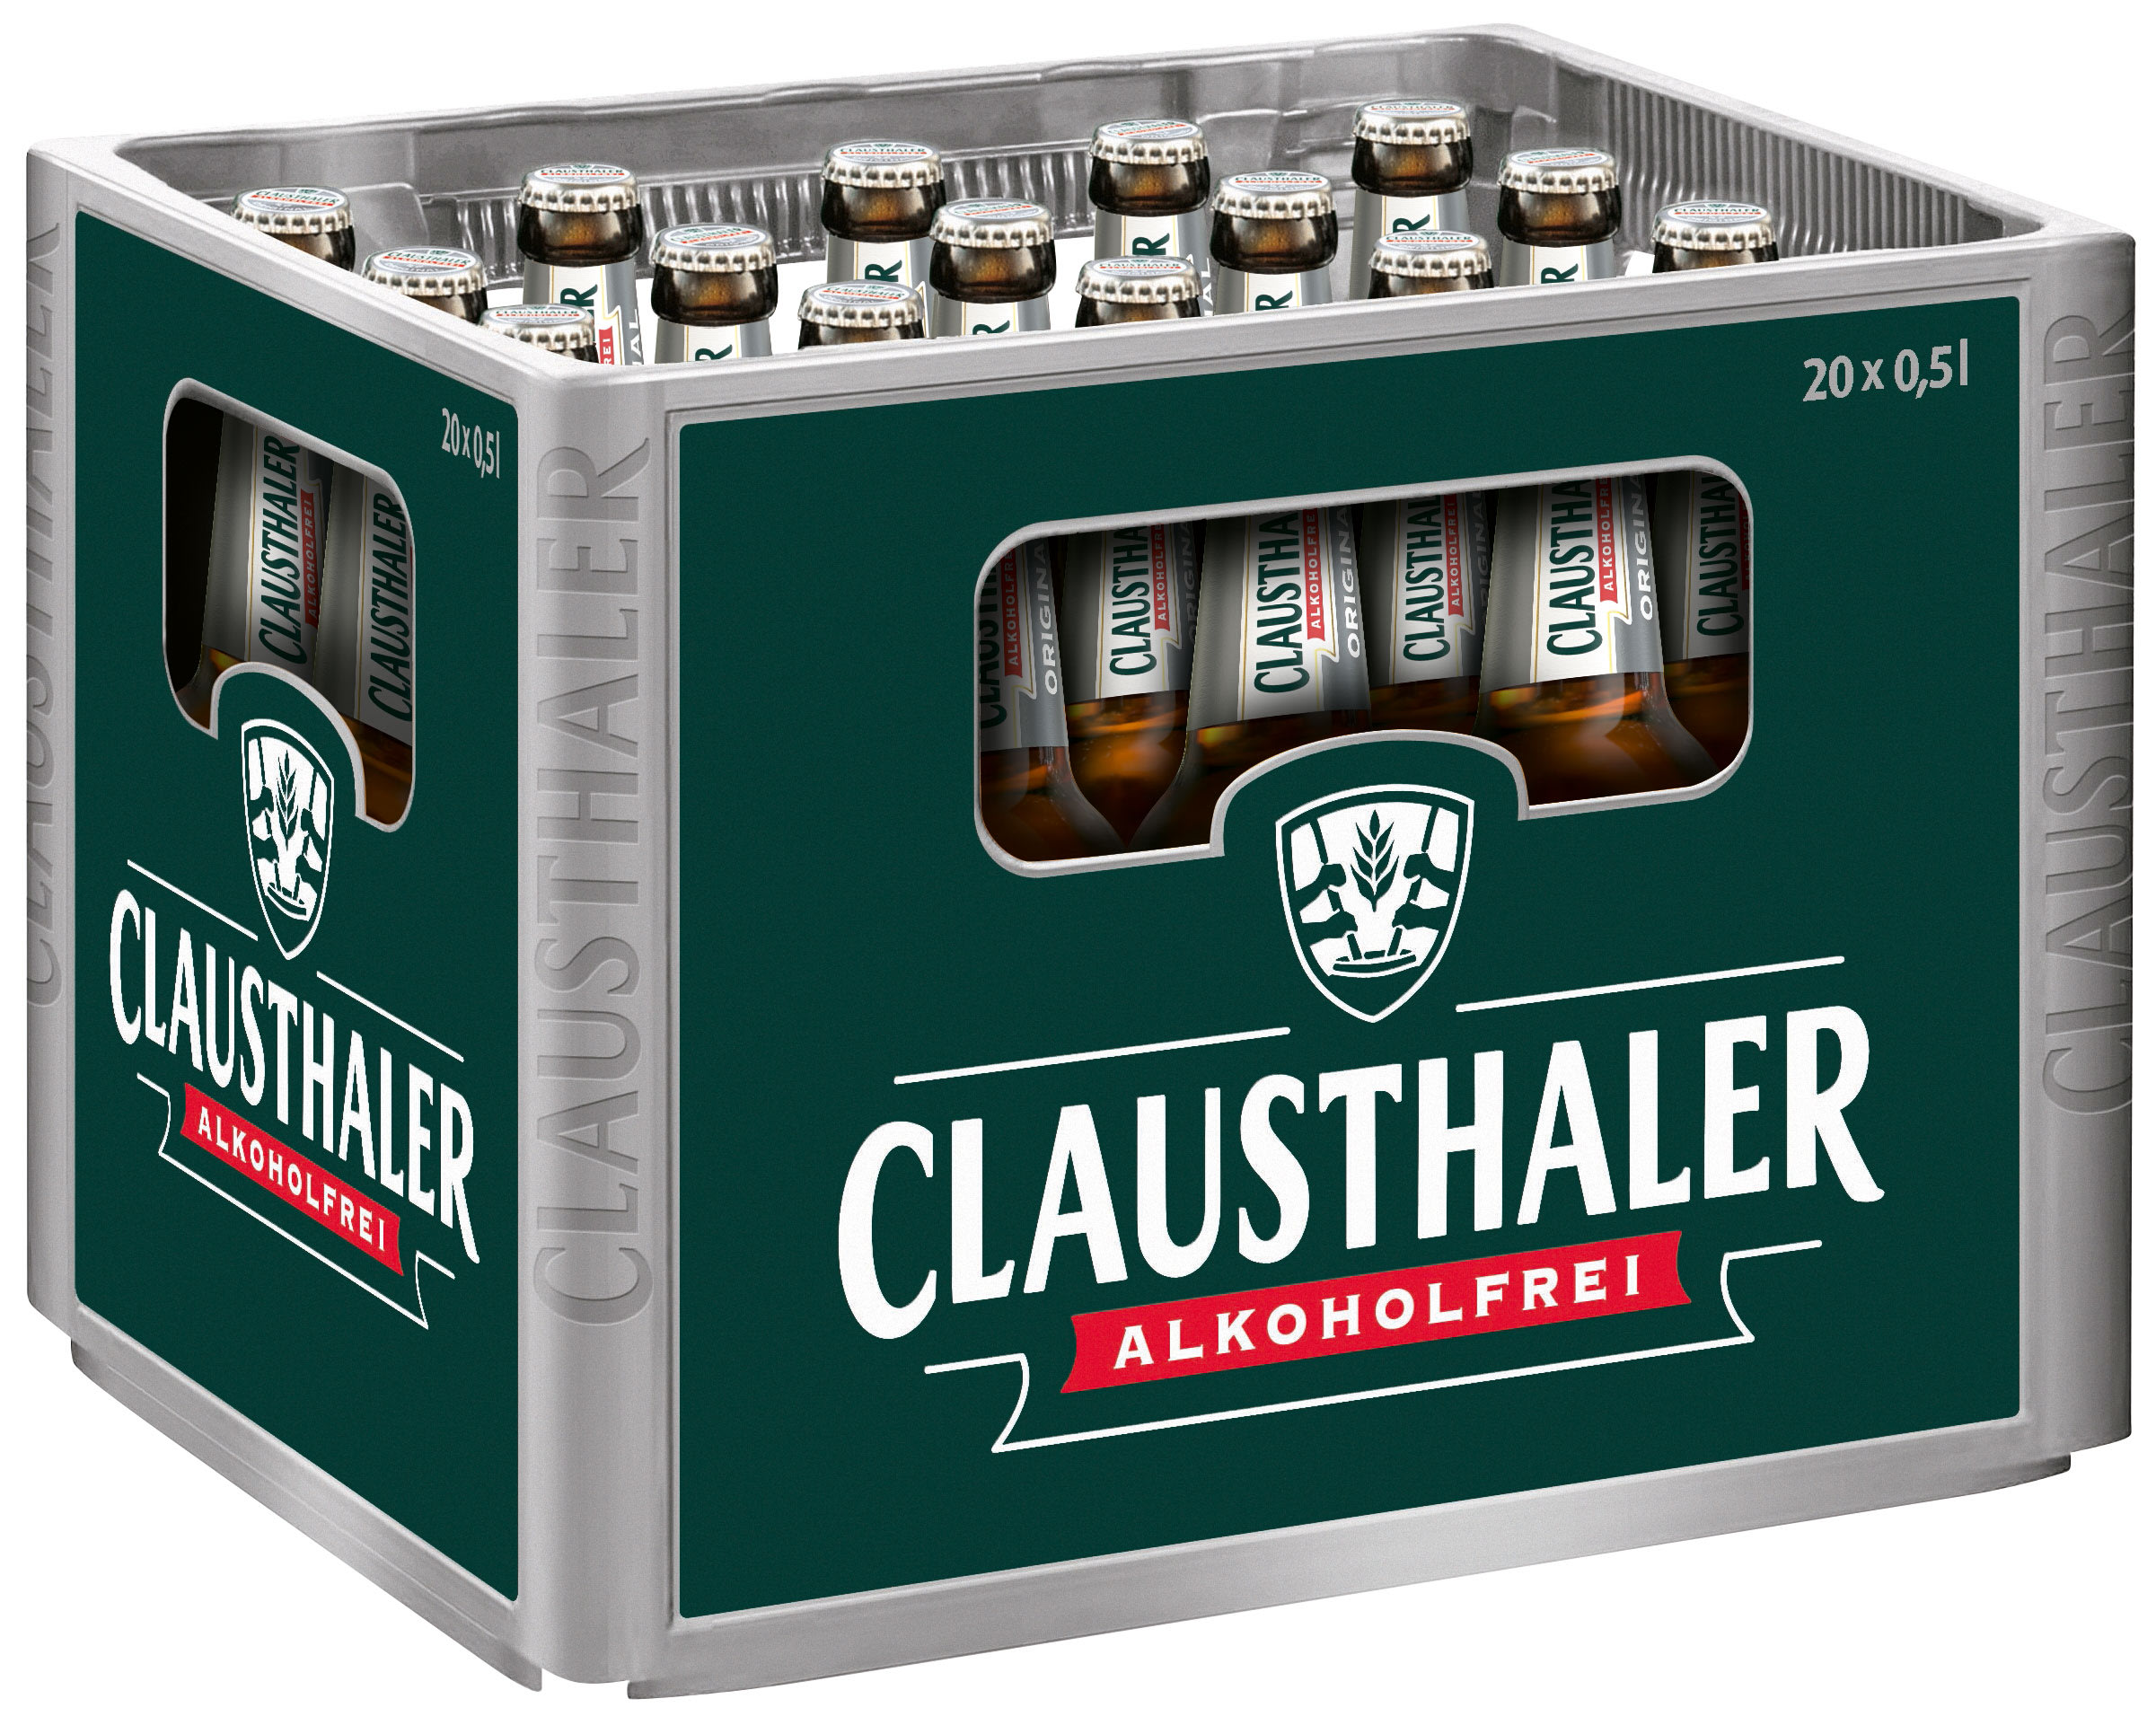 Clausthaler Classic alkoholfrei Kasten 20 x 0,5 l Glas Mehrweg